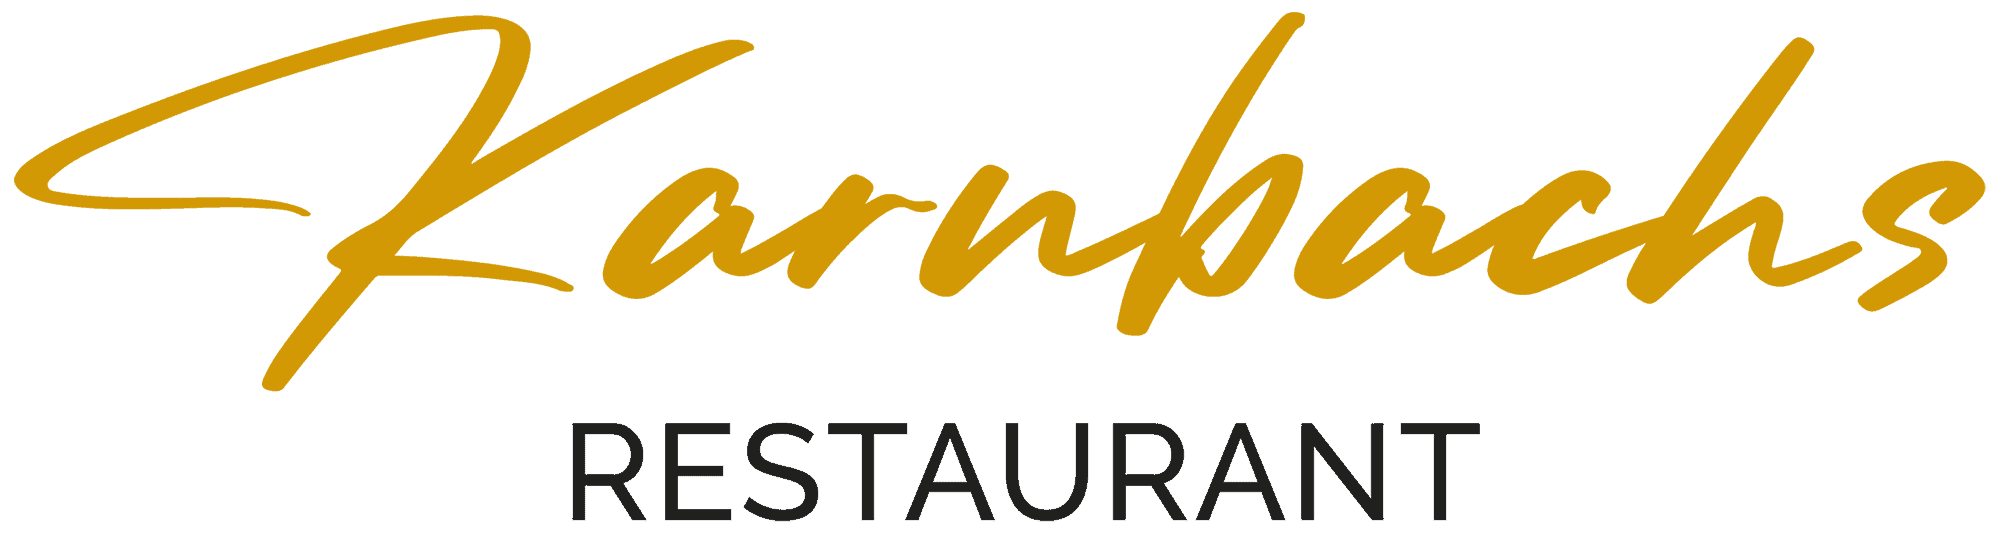 Restaurant Karnbachs Rz